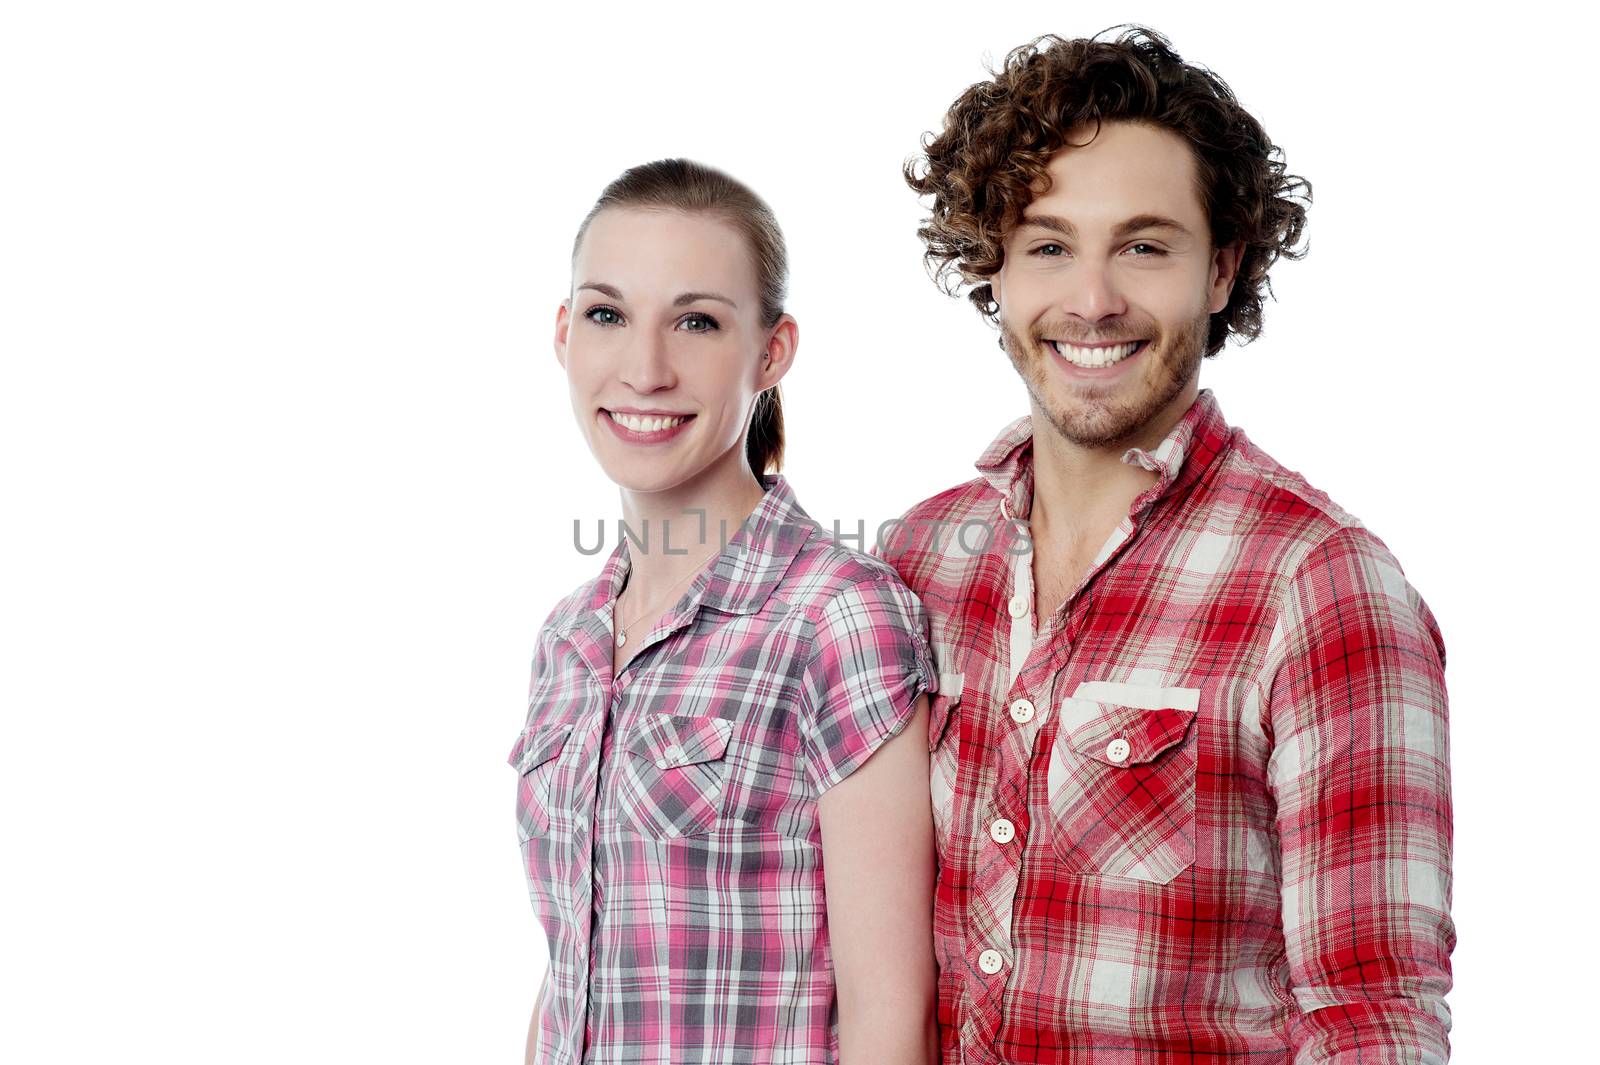 Smiling young couple wearing stylish shirts